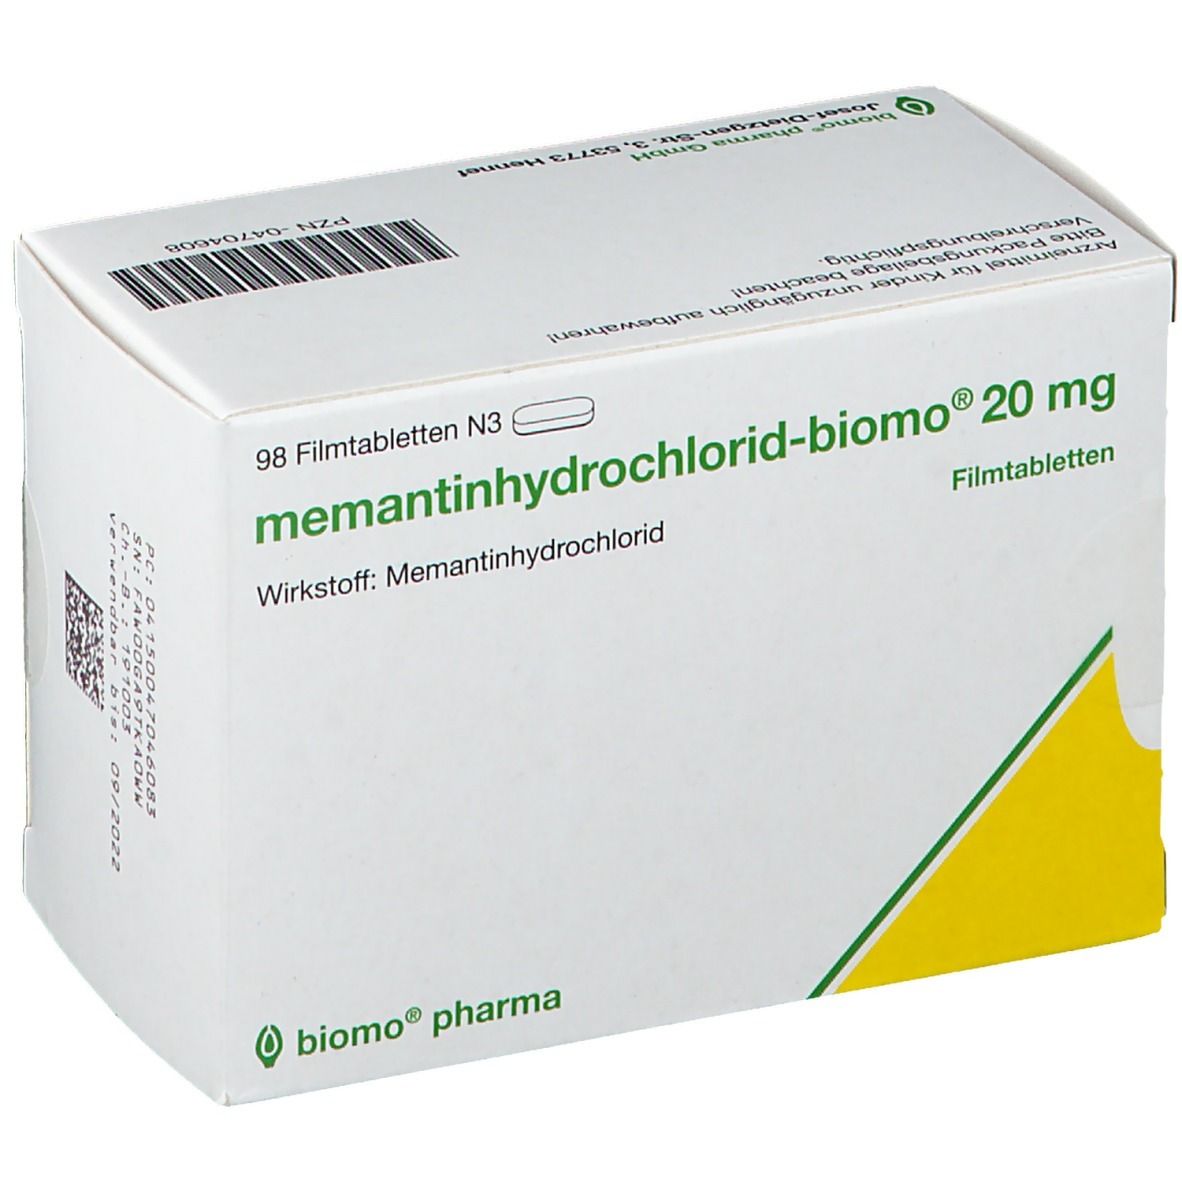 memantinhydrochlorid-biomo® 20 mg